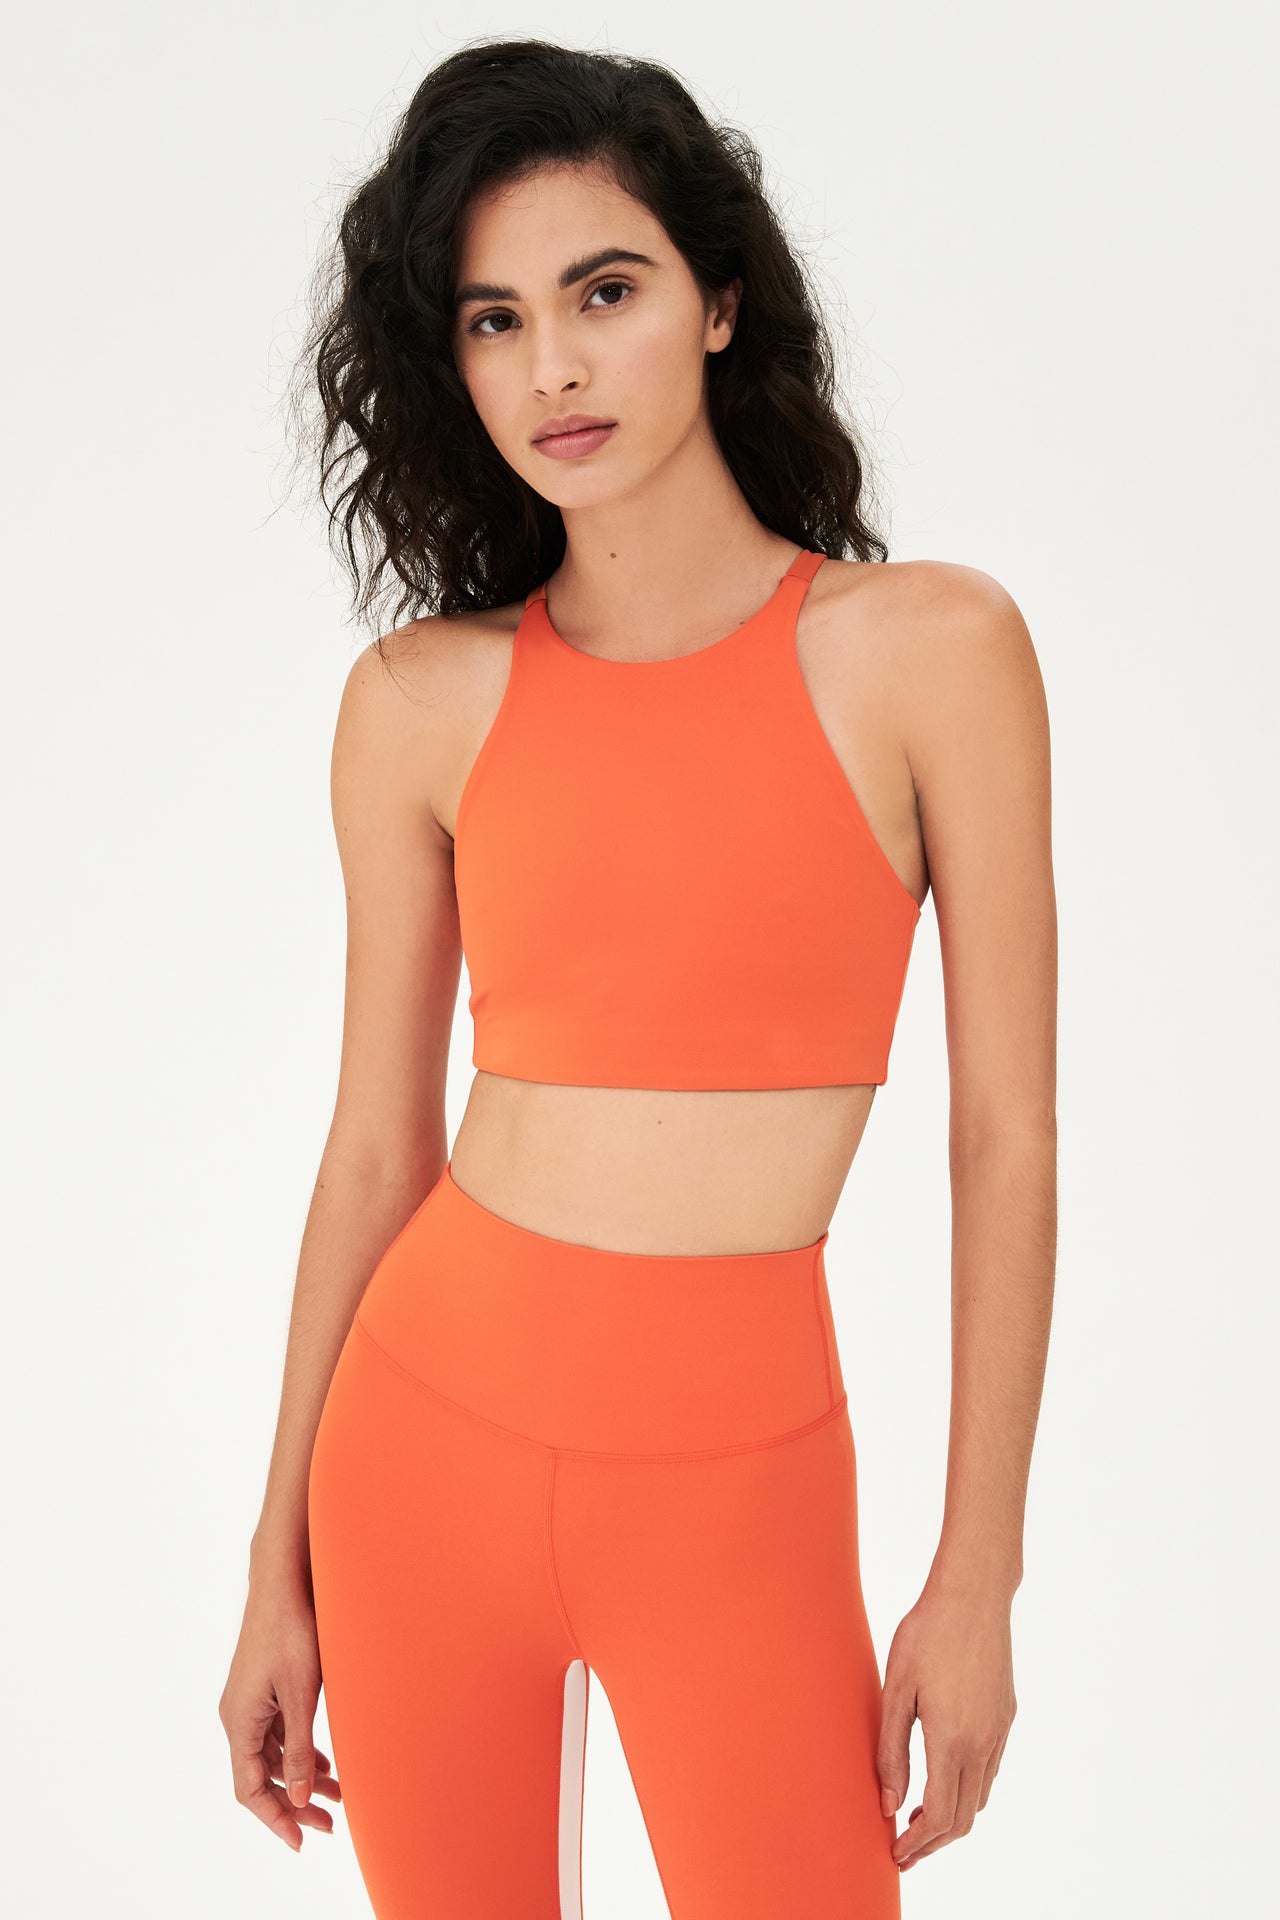 Front view of girl wearing orange sports bra that stops at collarbone and orange leggings